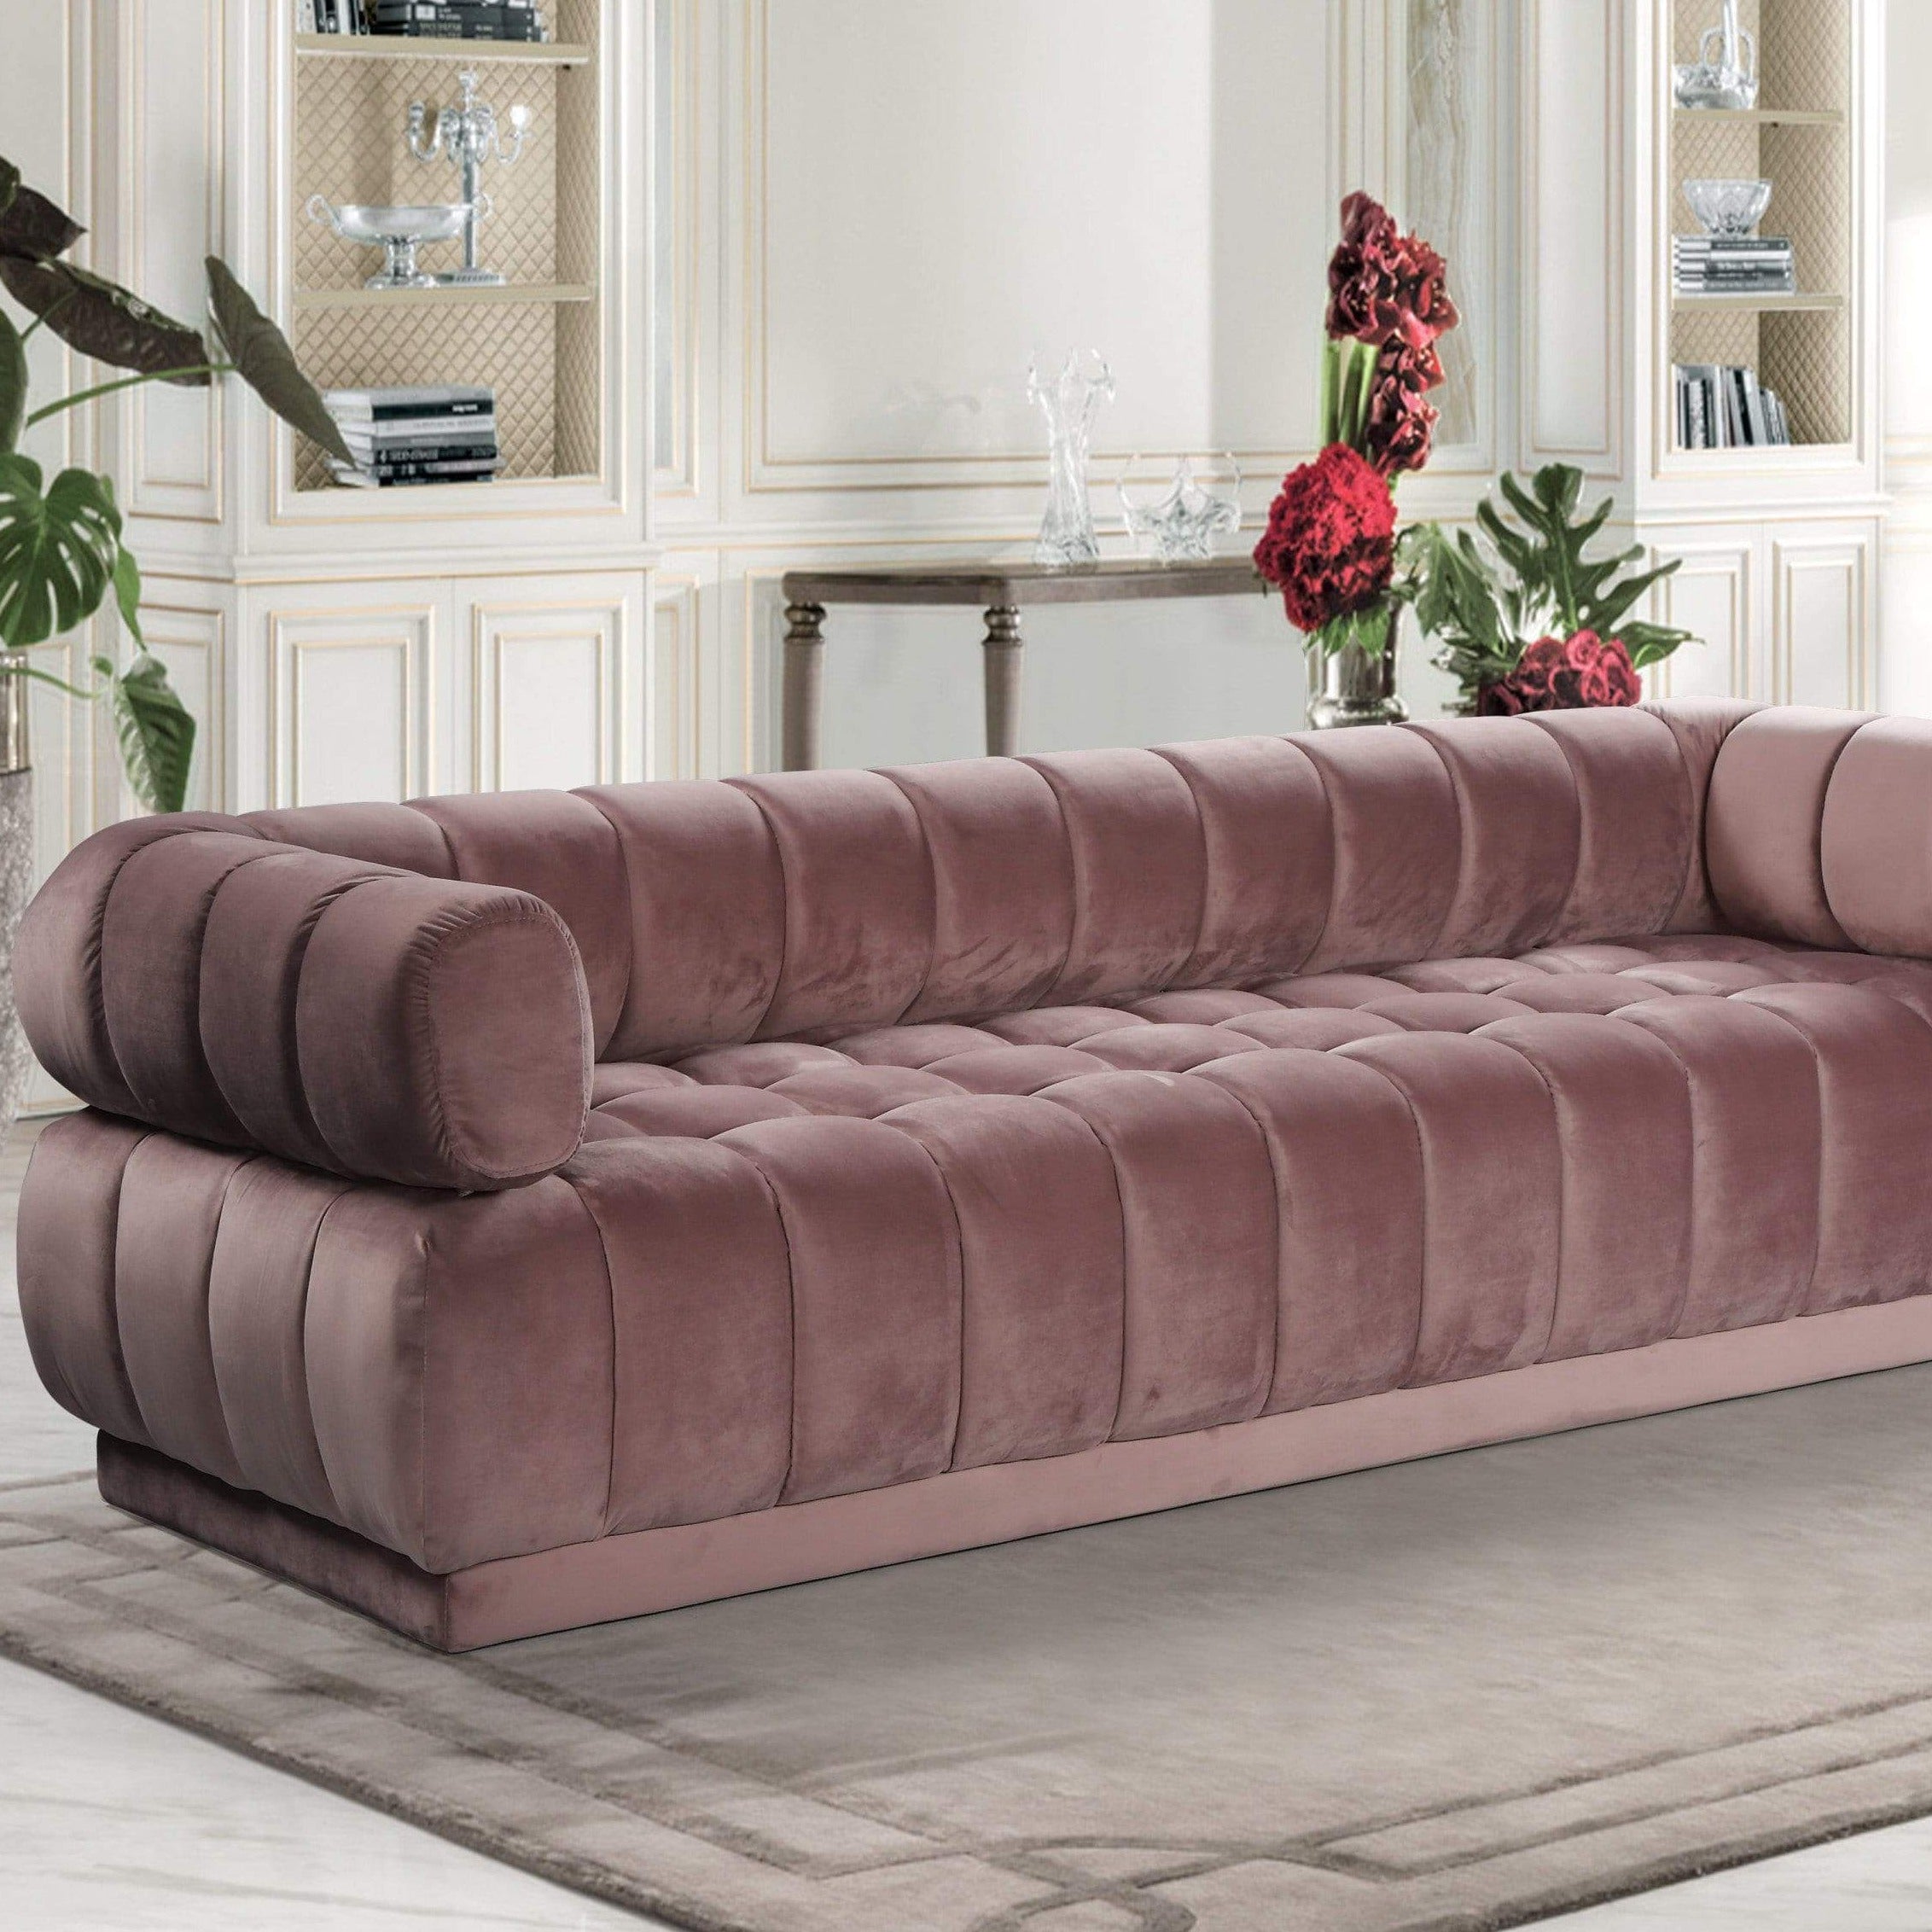 Tofino Sofa Velvet Upholstered Vertical Channel-Quilted Shelter Arm Tufted Design